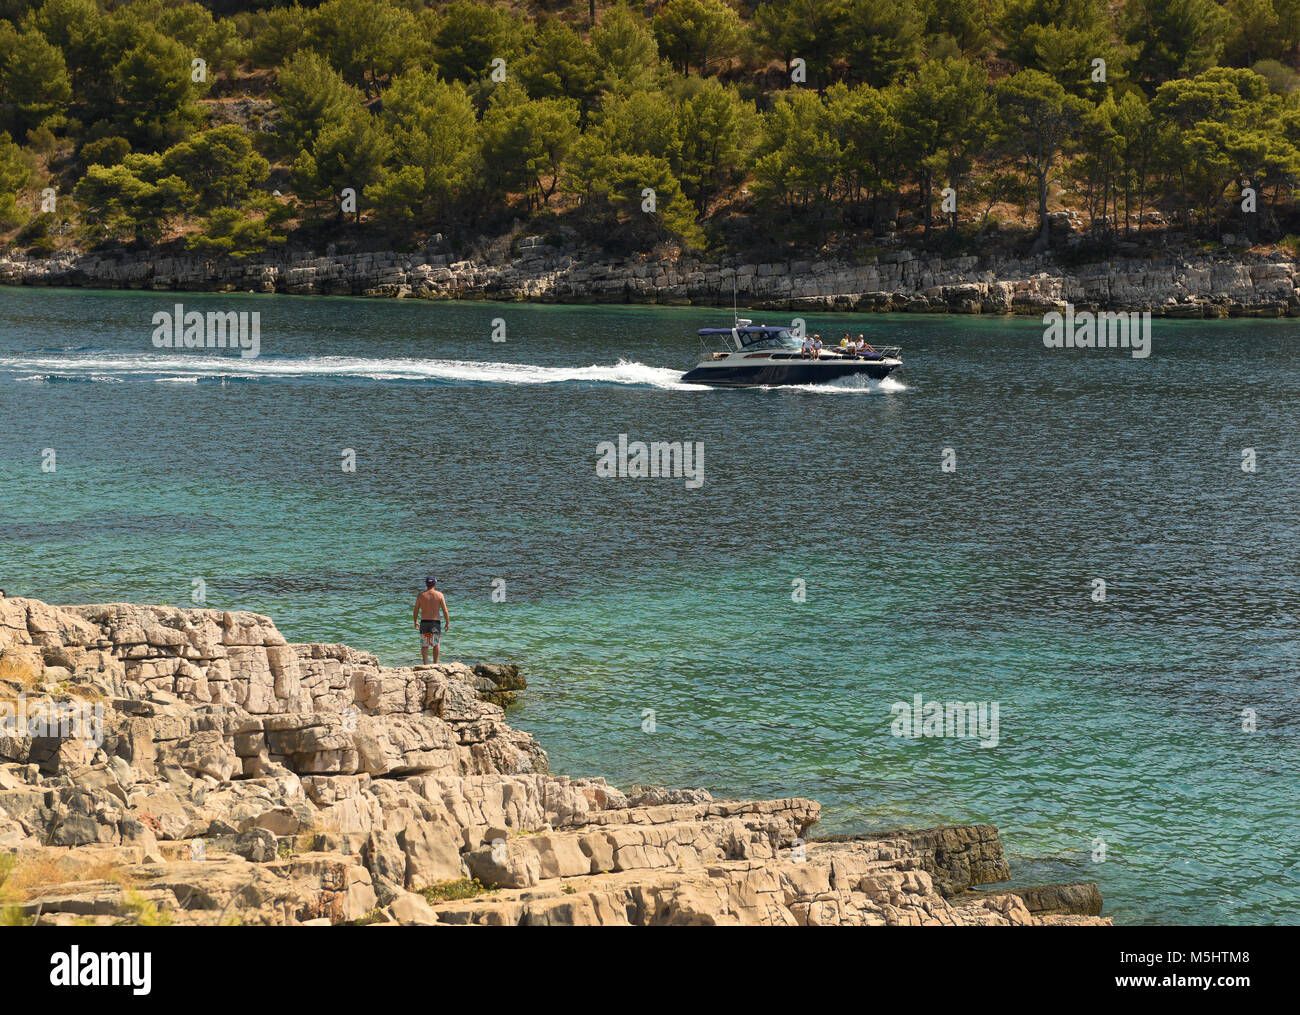 Beautiful Mediterranean sea :: Stock Photography Agency :: Pixel